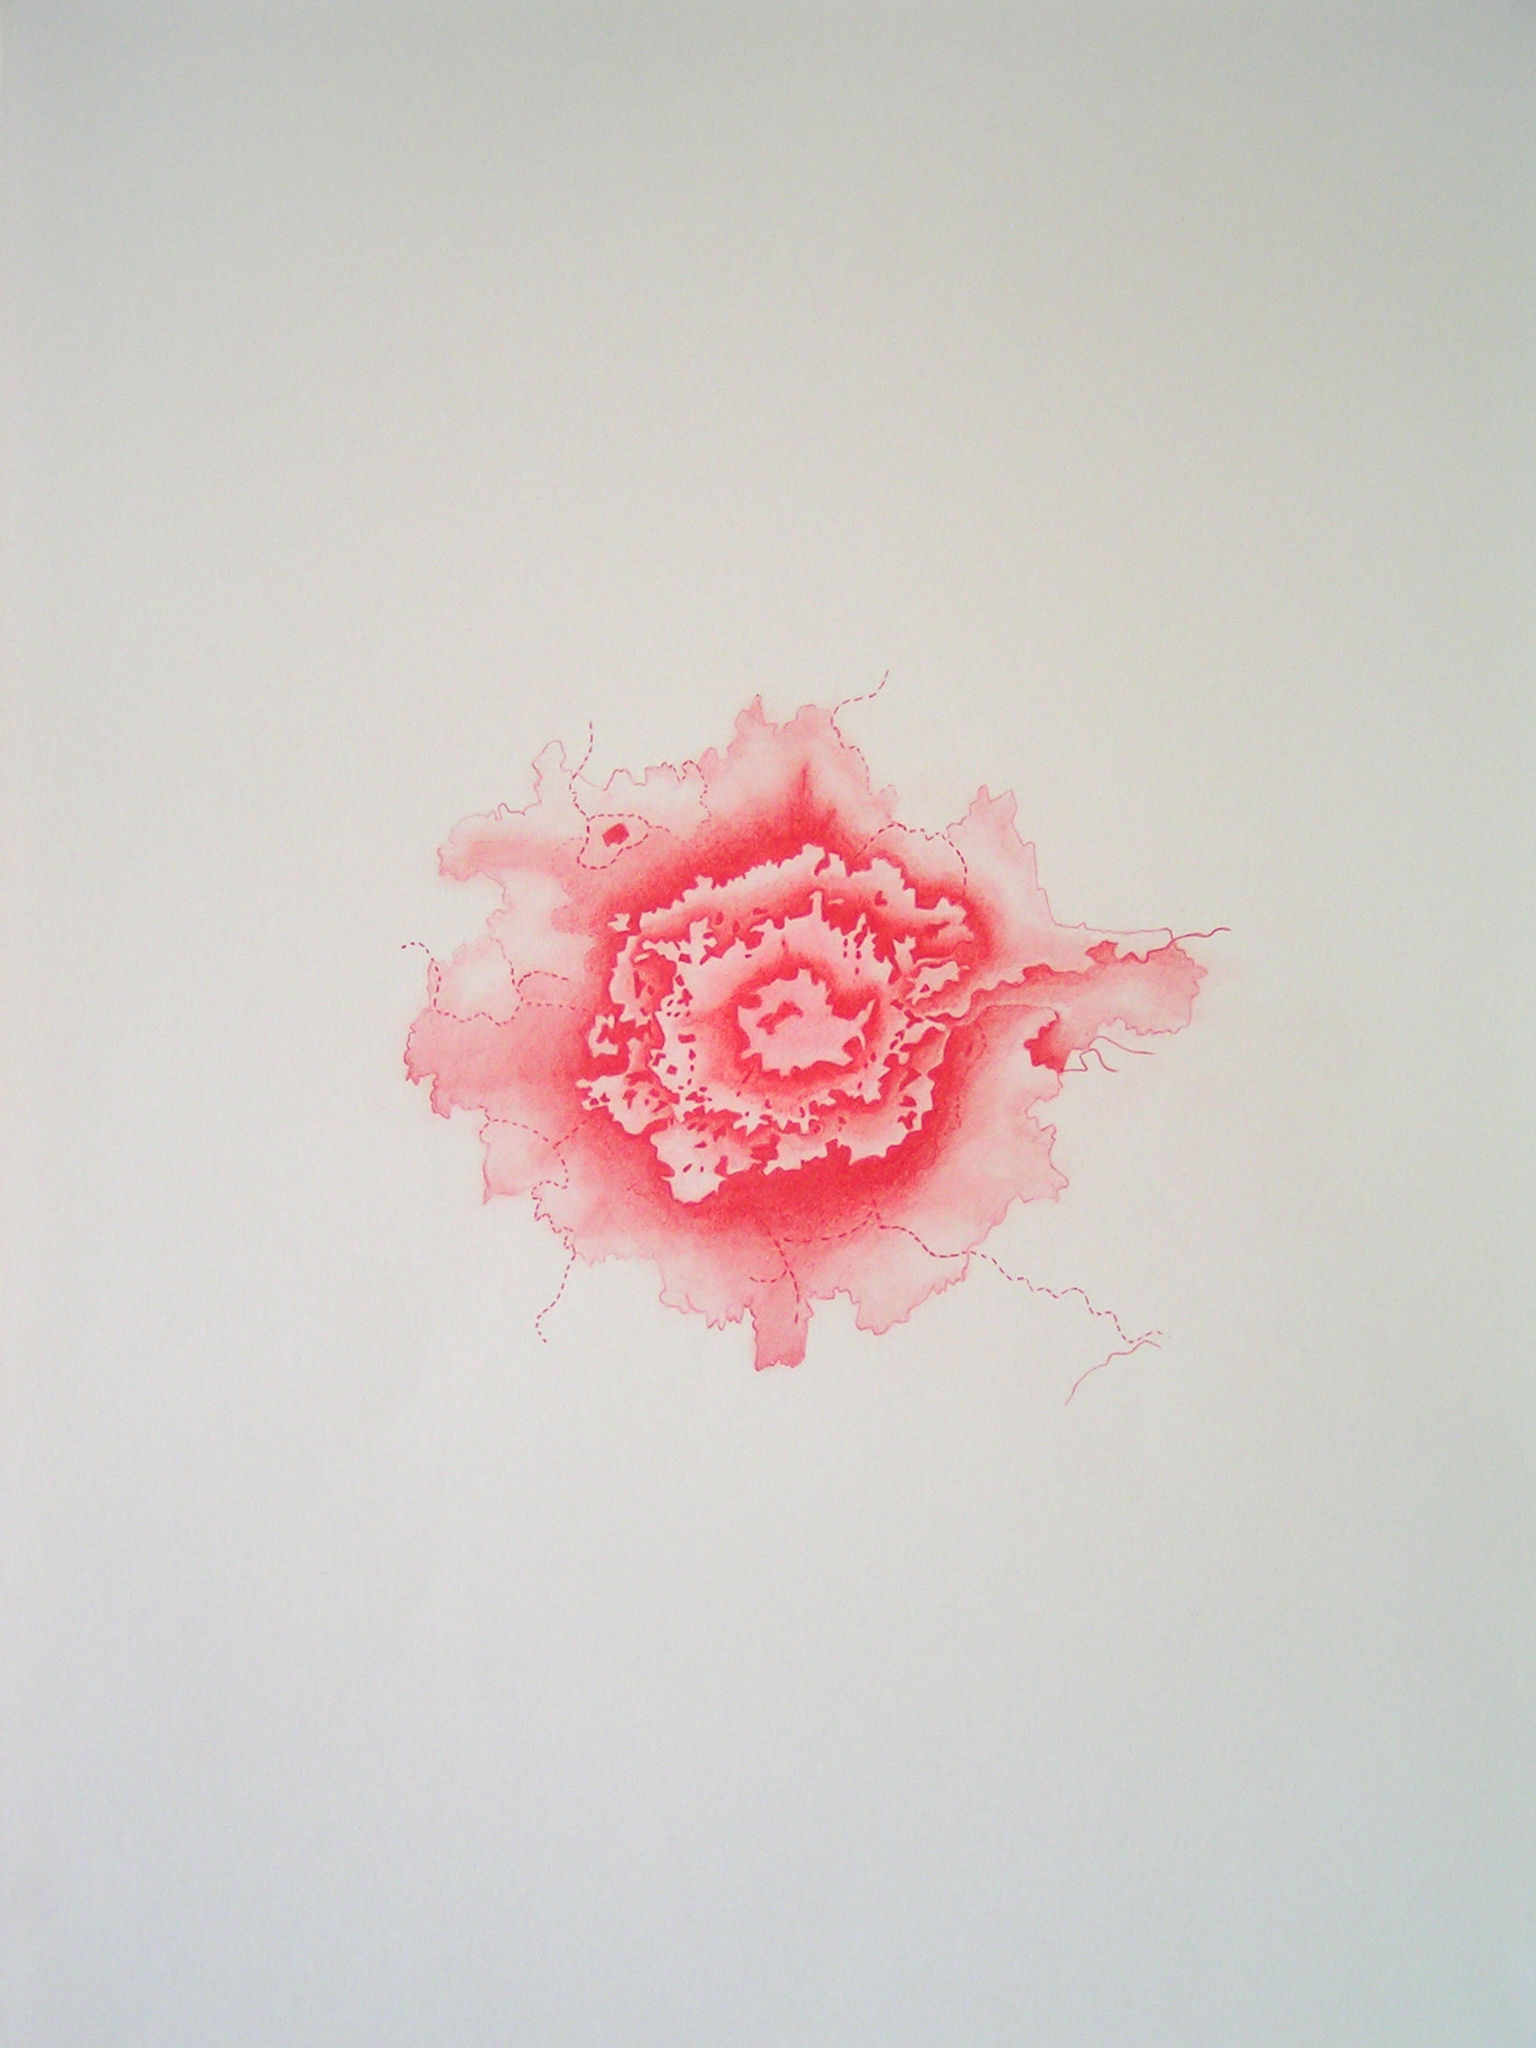 Emma J Williams 'Blooming London Series - Pale Geranium Lake' 2008 pencil on paper